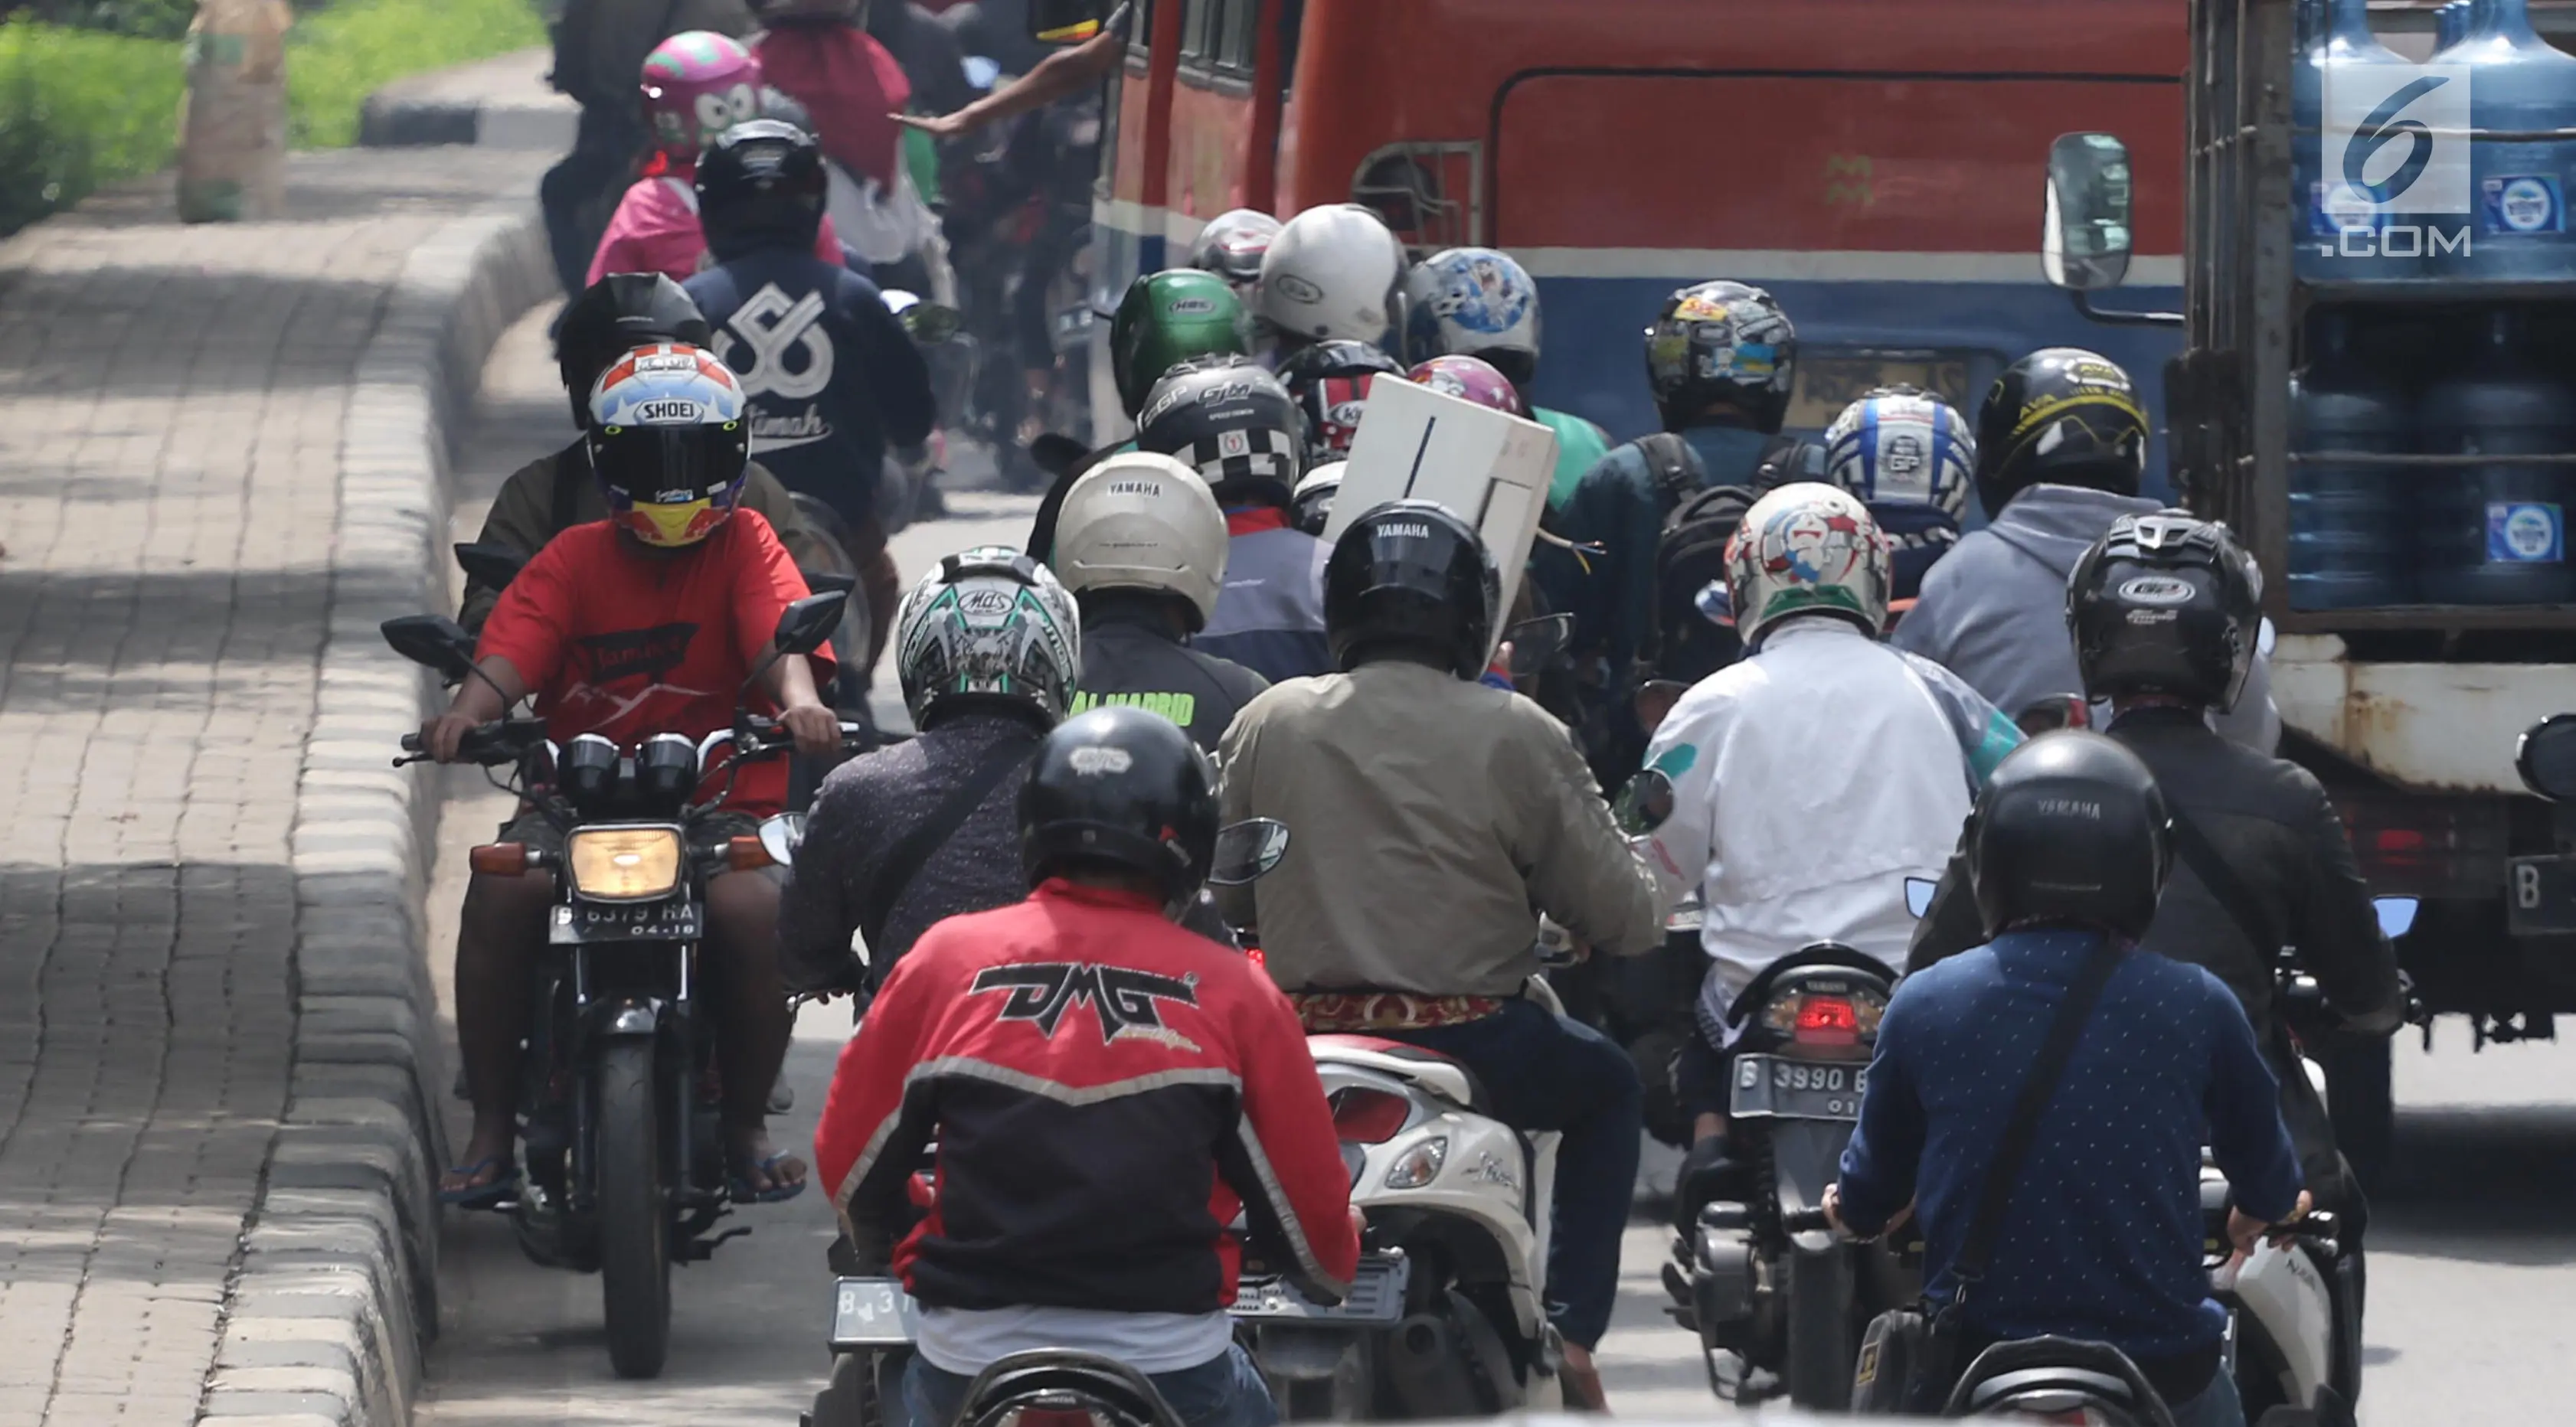 Pengendara motor melawan arah saat terjadi kemacetan di Jalan Daan Mogot, Jakarta, Jumat (23/3). Jalur putar balik yang jauh membuat pengendara melawan arah. (Liputan6.com/Arya Manggala)